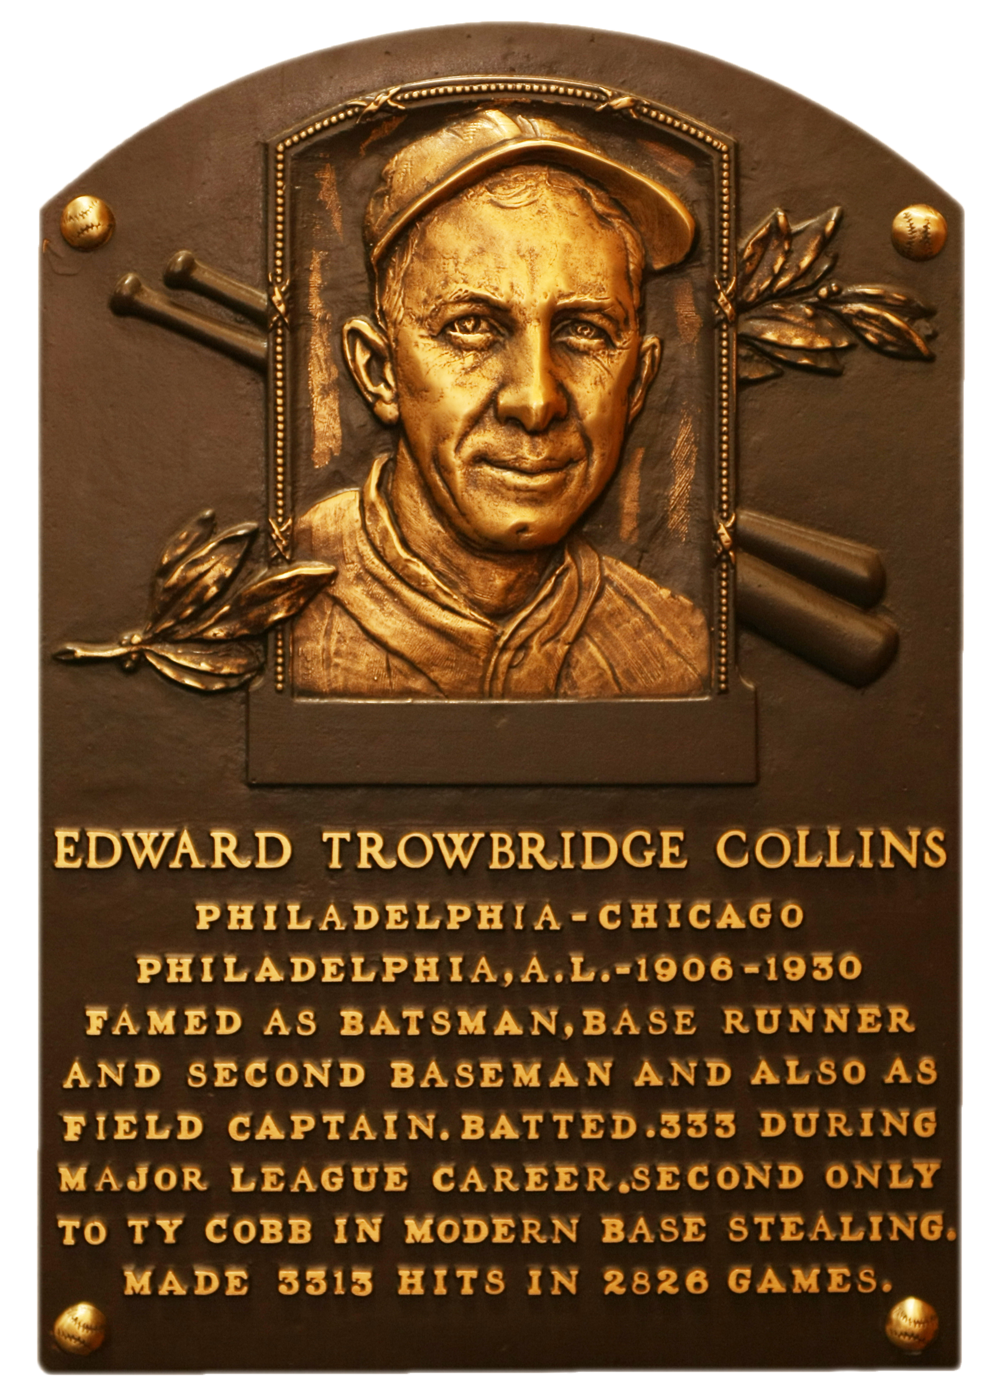 Eddie Collins Hall of Fame plaque